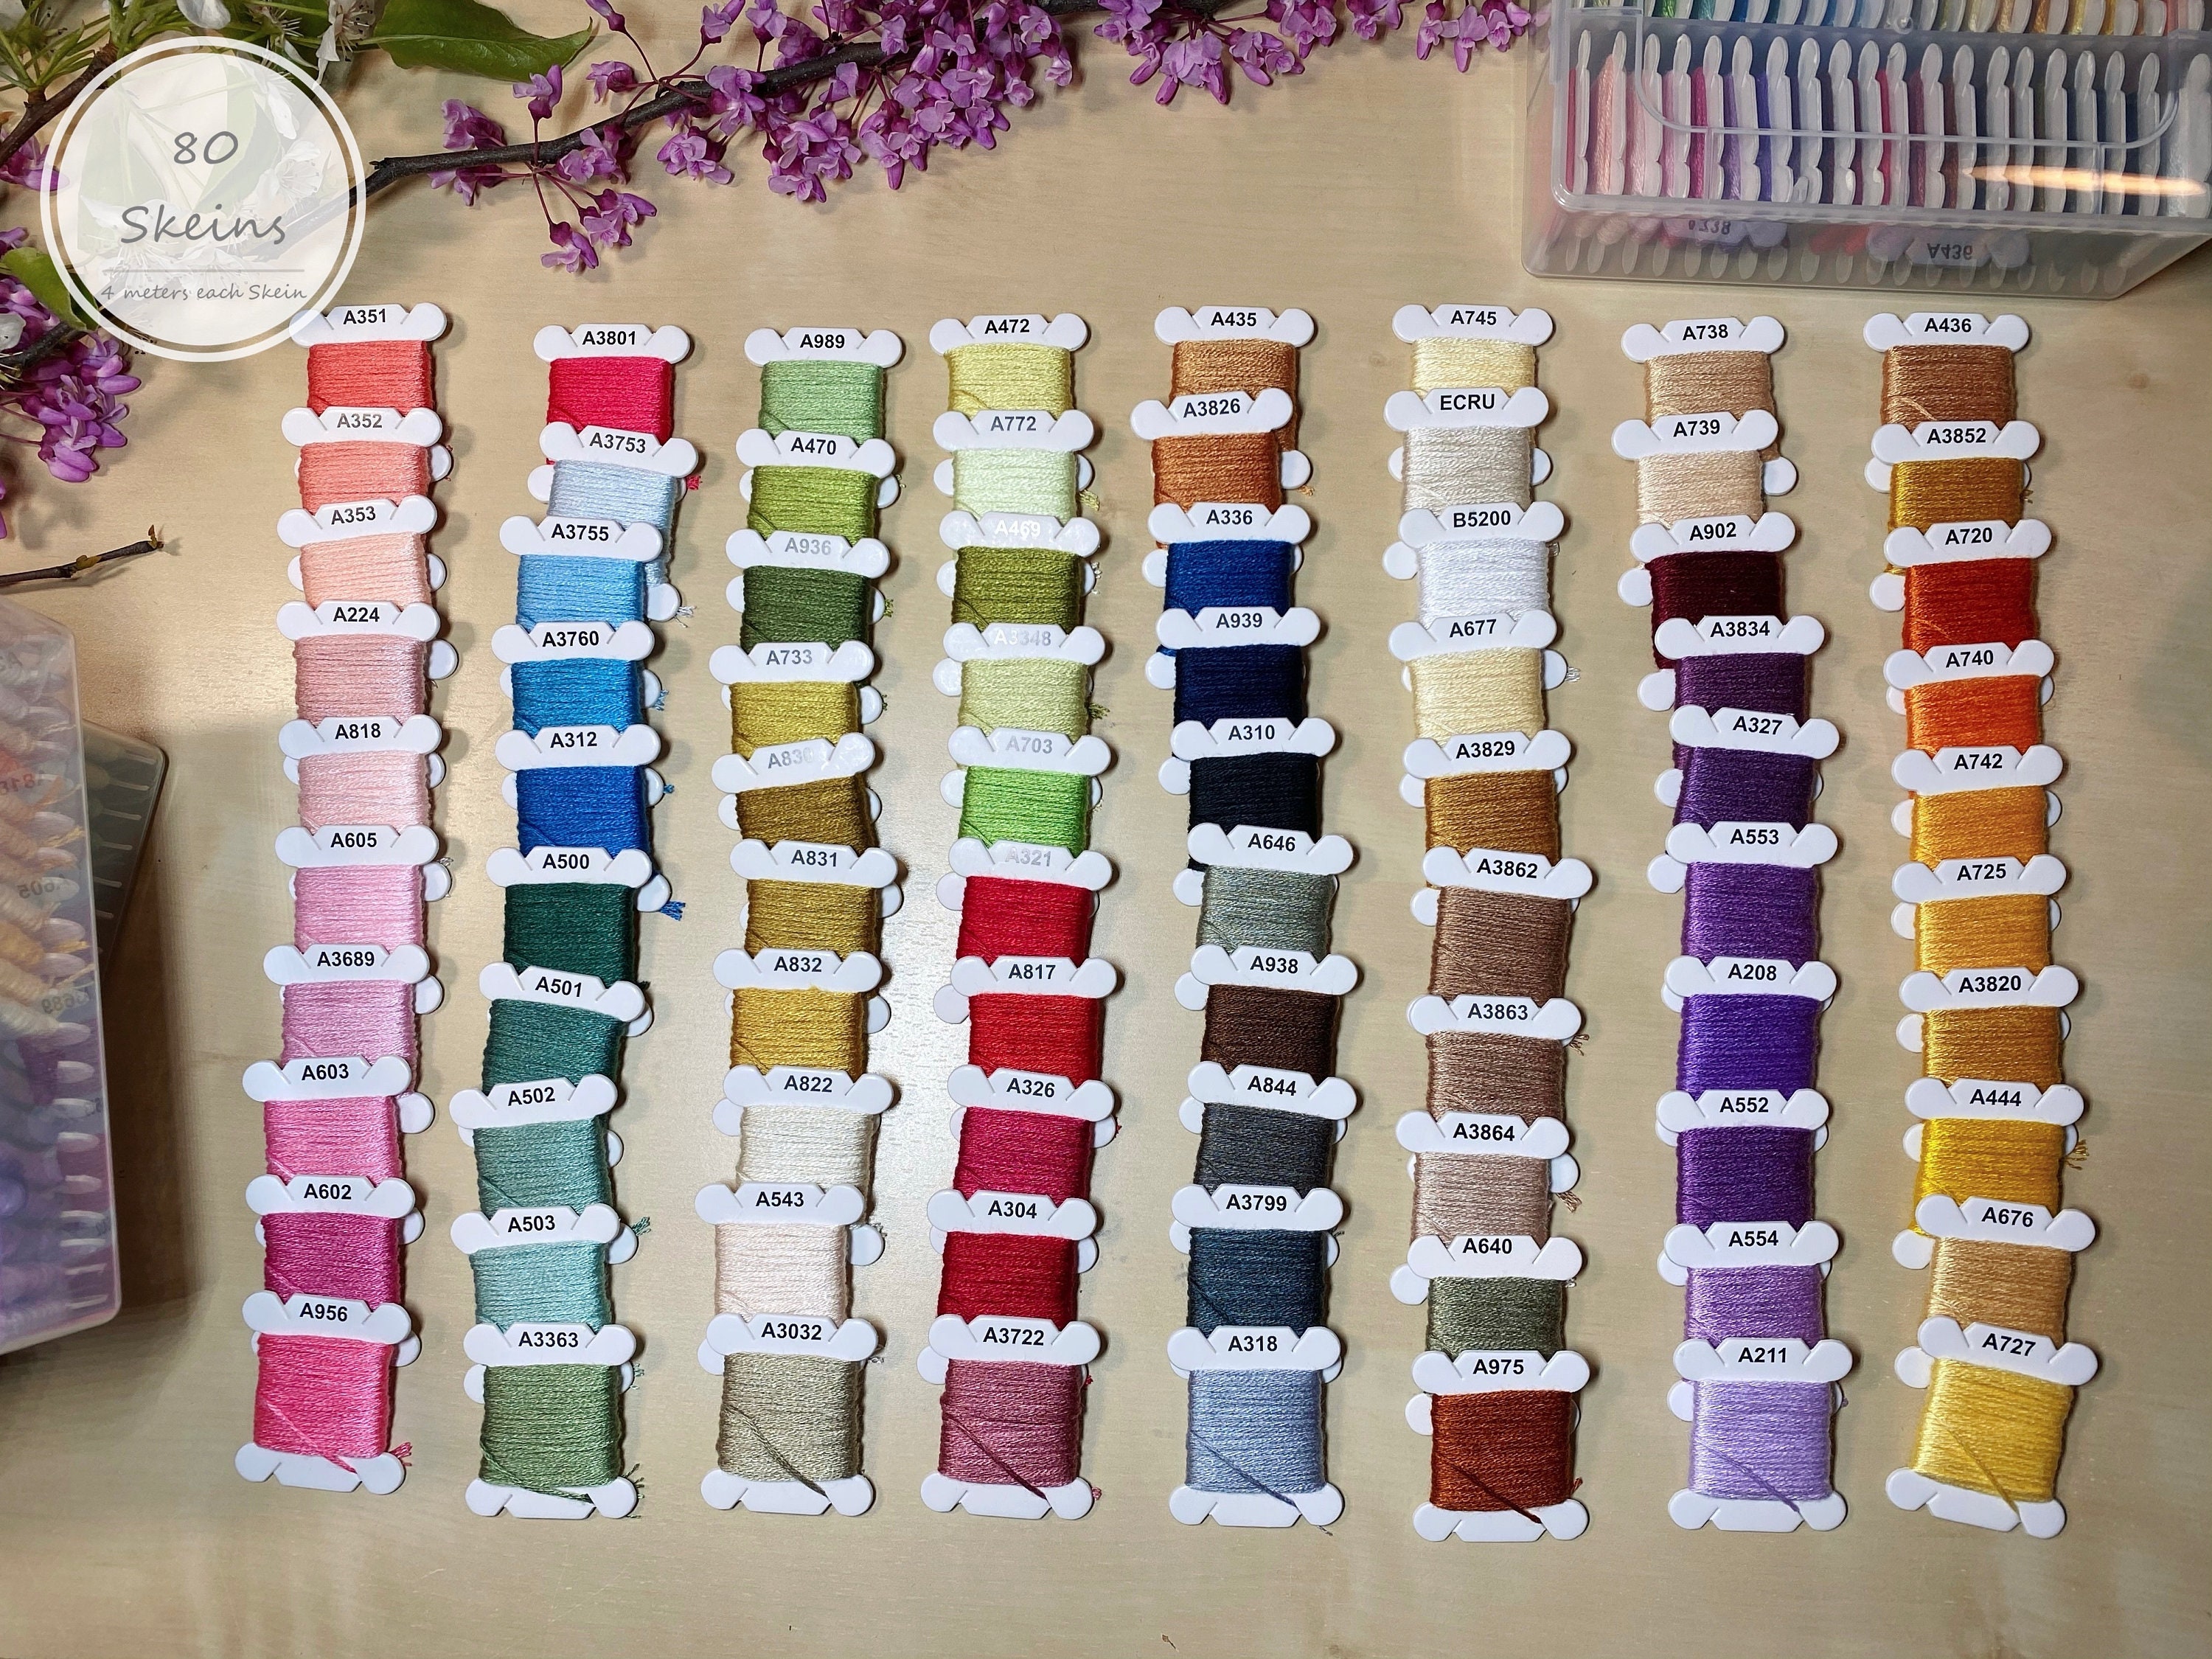 Premium Rainbow Color Embroidery Floss bobbins - Cross Stitch Threads -  Friendship Bracelets Floss - Crafts Floss - 20 Bobbins Per Pack Embroidery